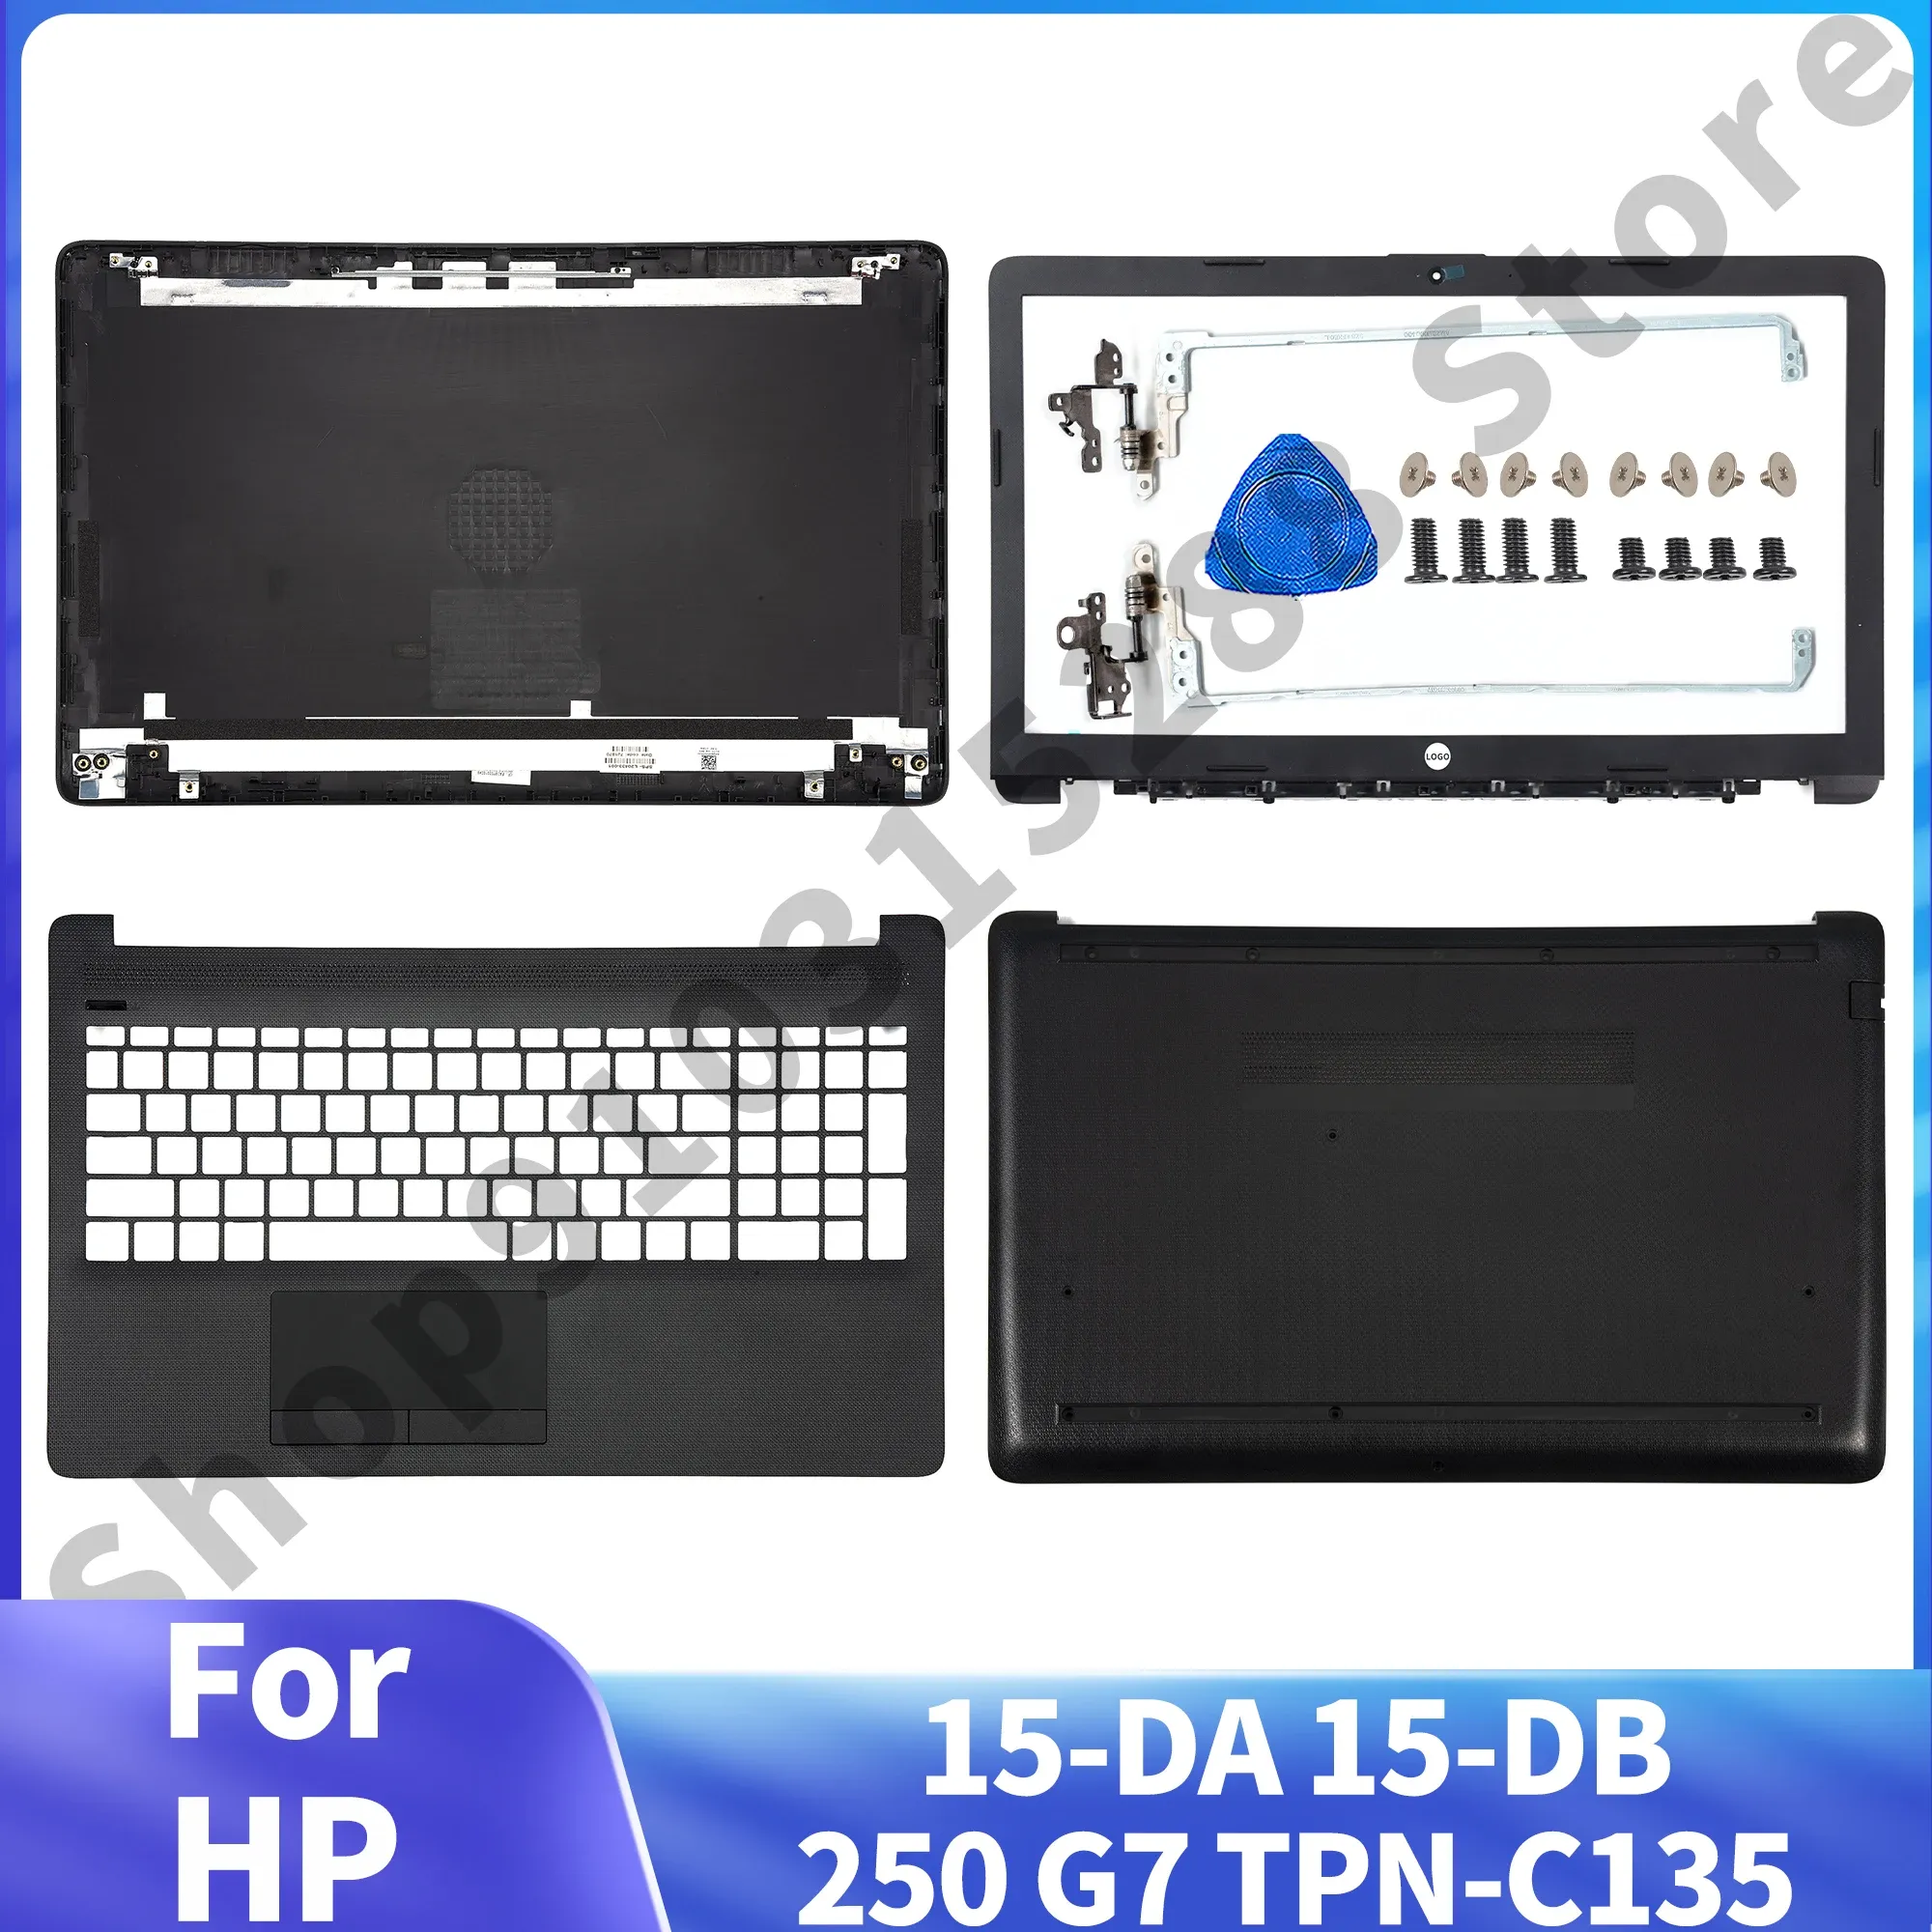 Fall Nytt toppfodral för HP 15DA 15DB 250 G7 255 G7 15DA0014DX Laptop LCD Back Cover/Front Bezel/Hinges/Palmrest/Bottom Case